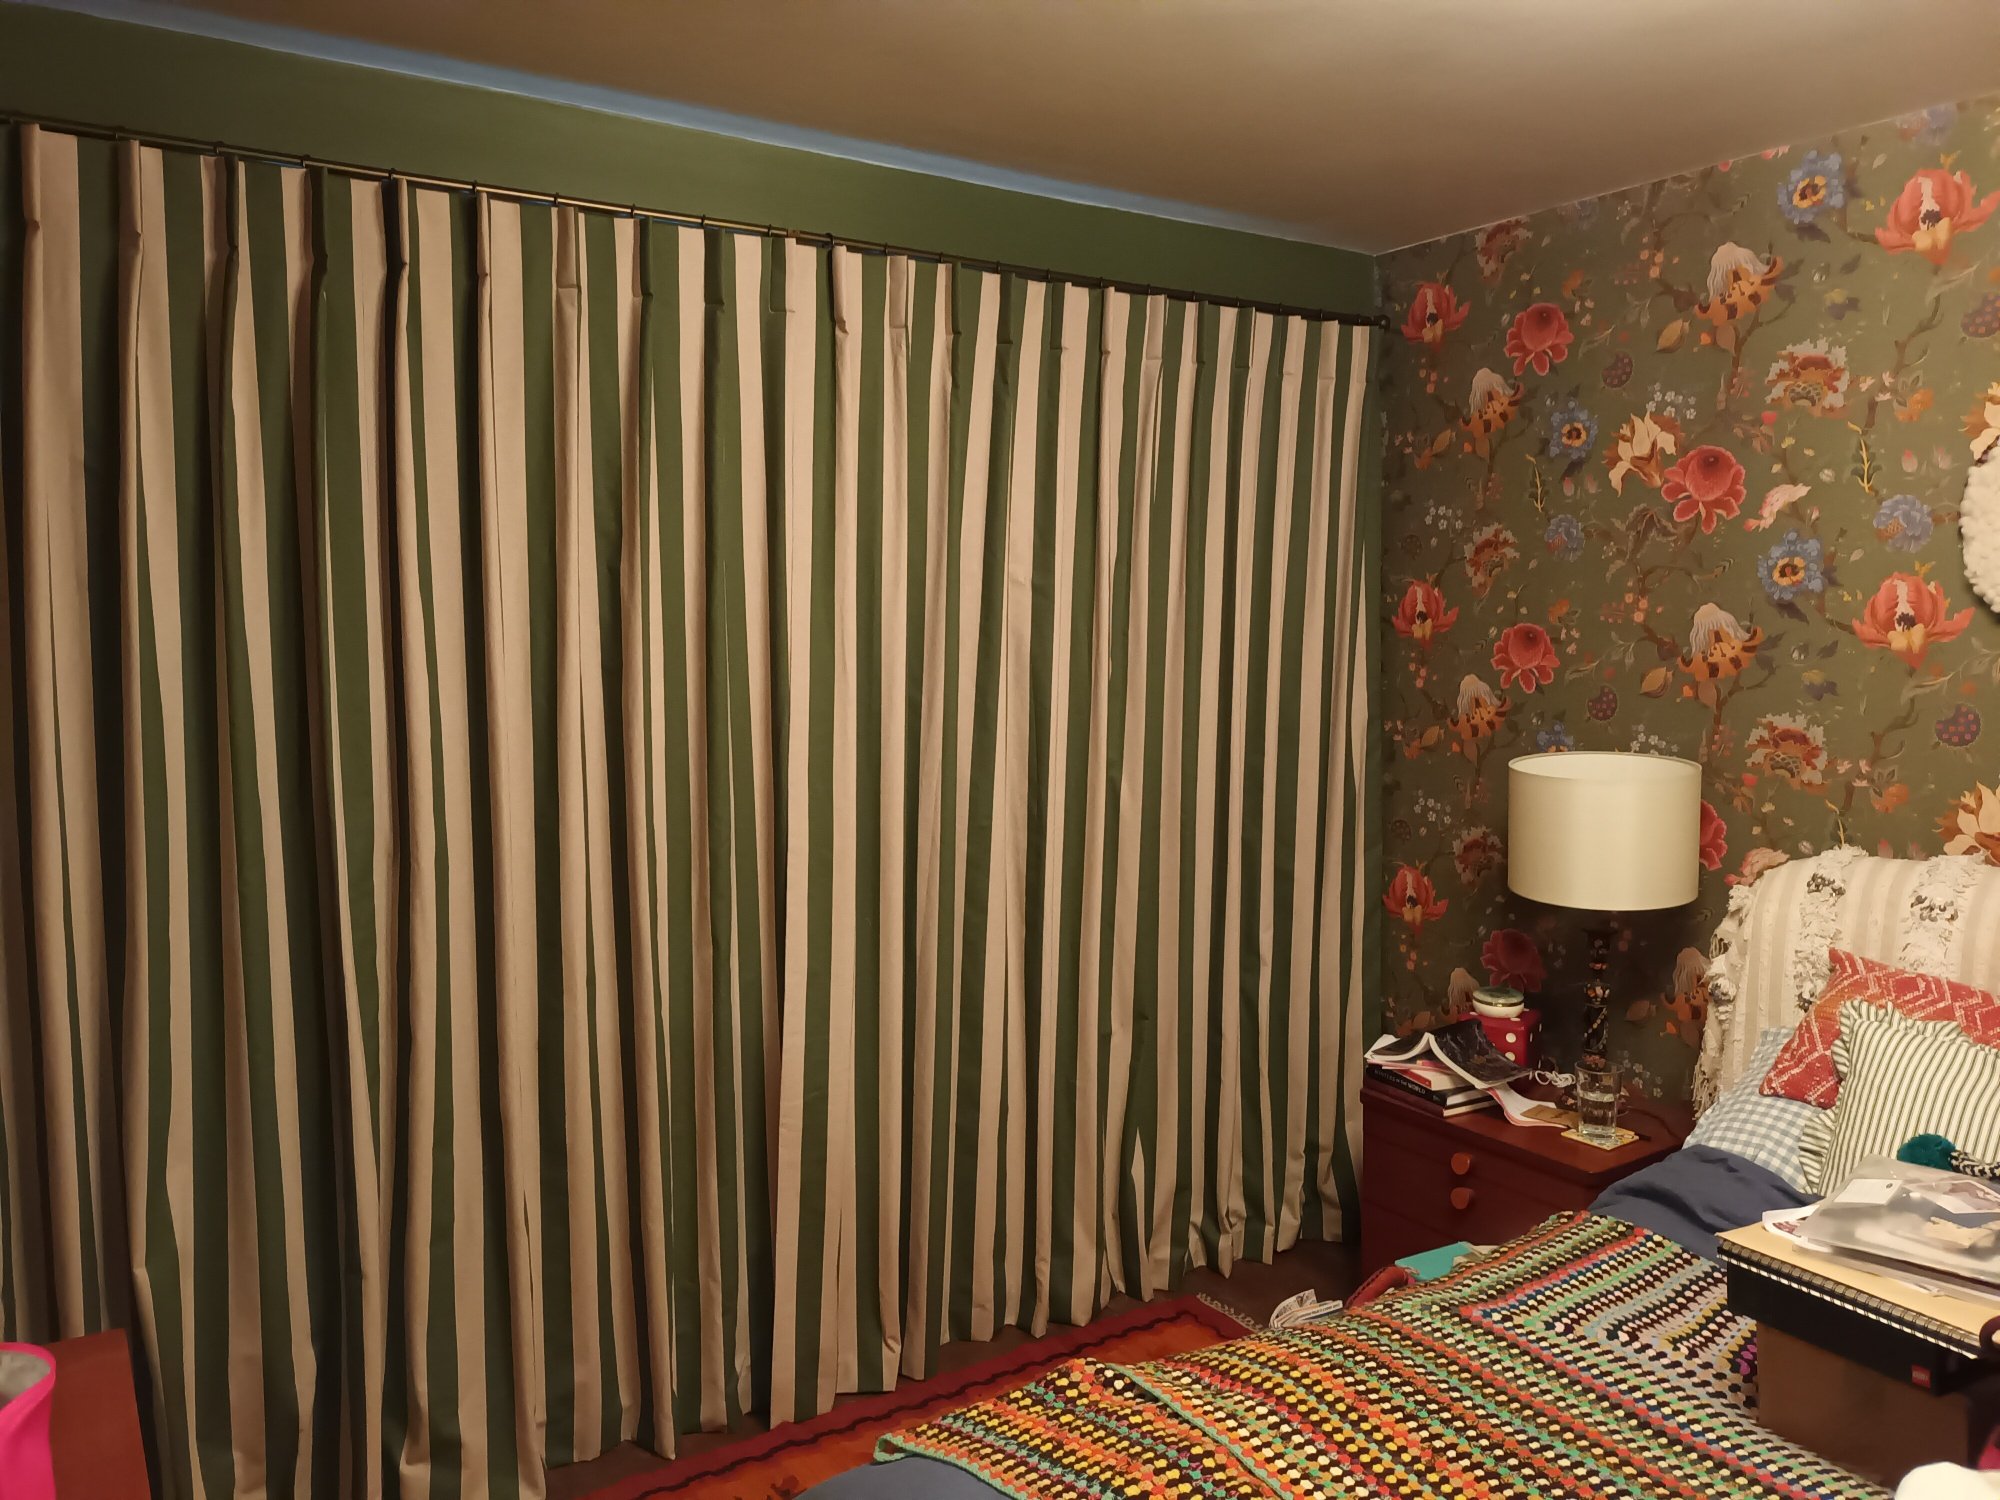 Bedroom curtains.jpg